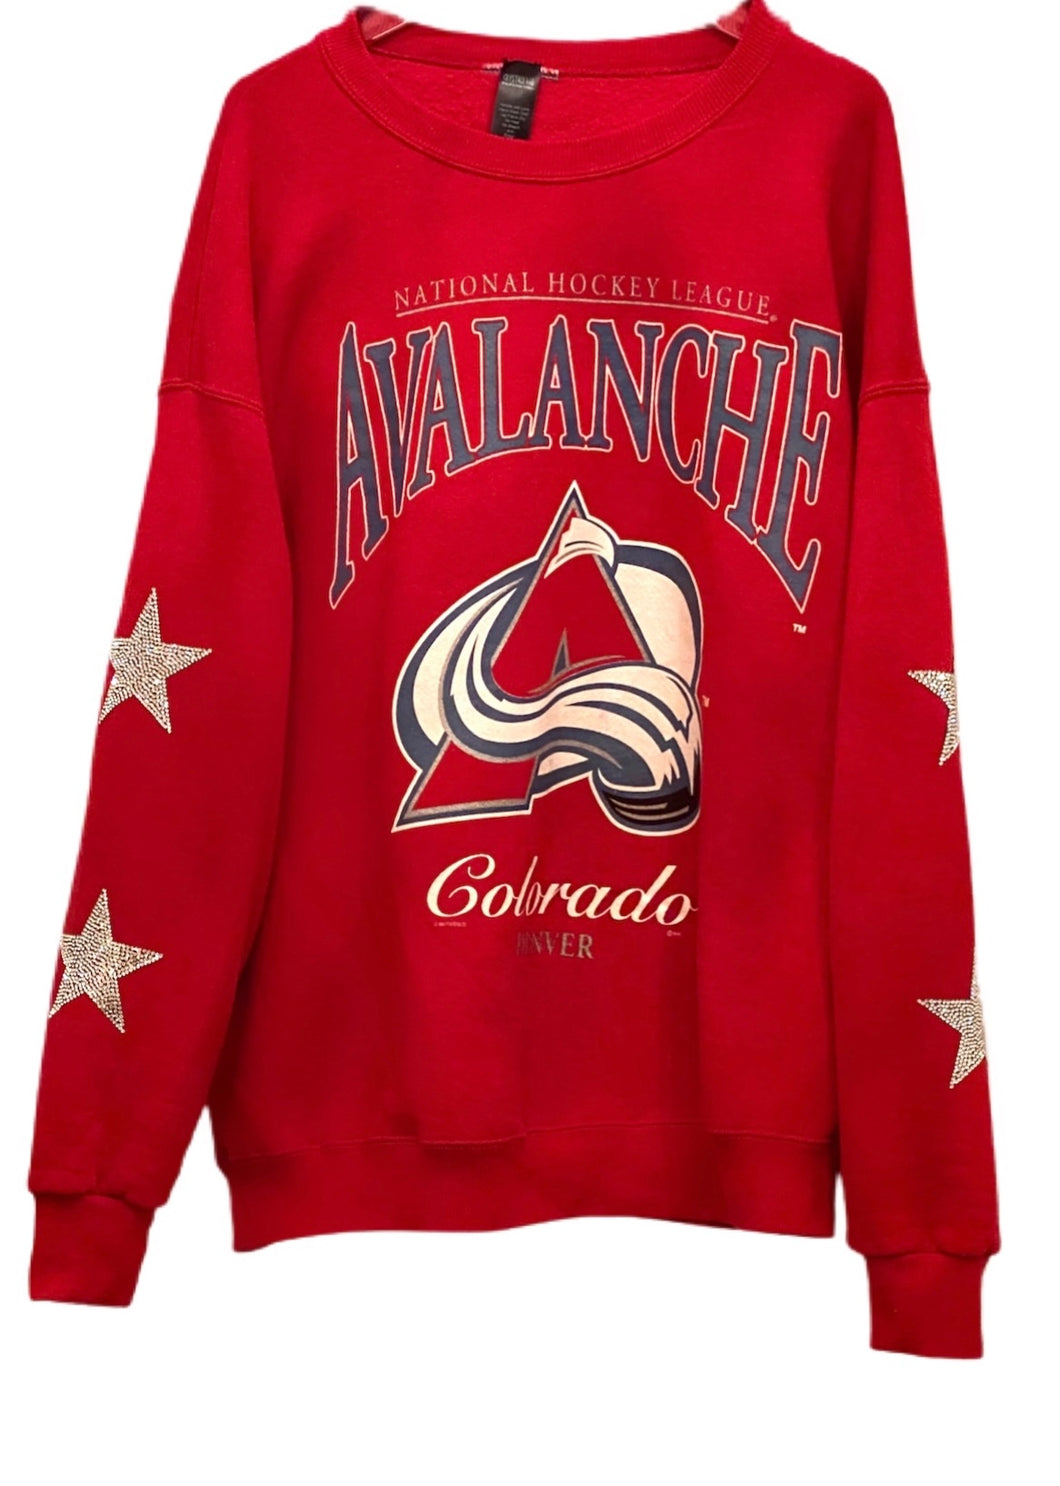 Denver Colorado Avalanche, NHL One of a KIND Vintage Sweatshirt with Crystal Star Design